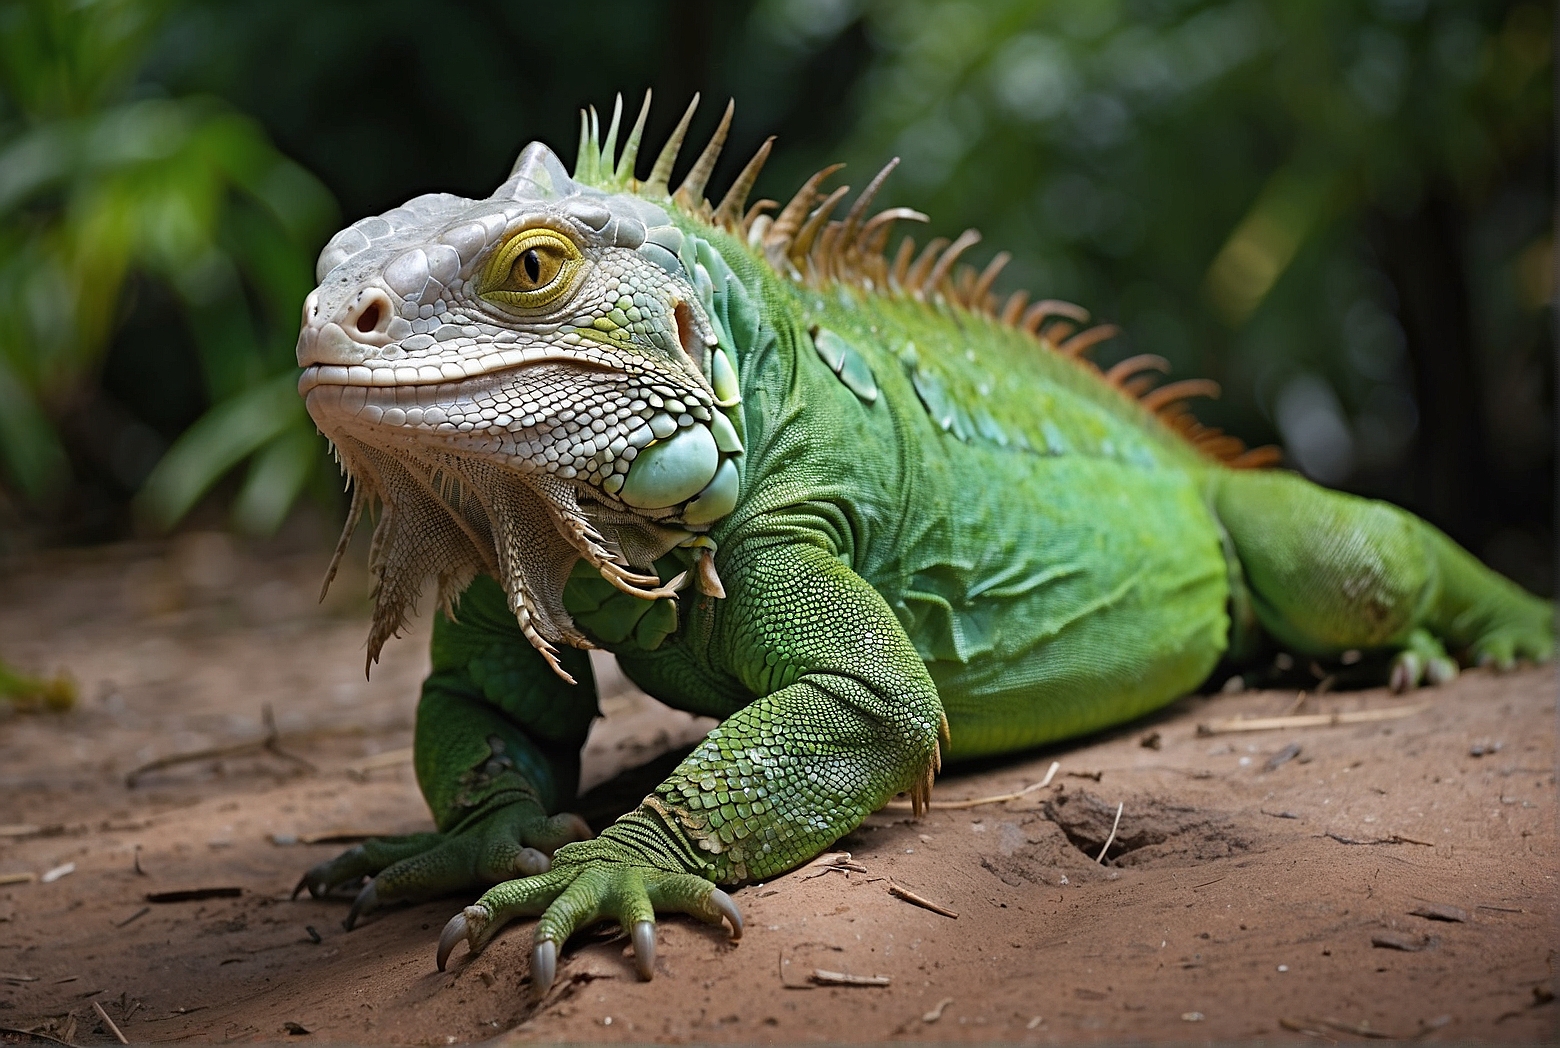 Are green iguanas poisonous?